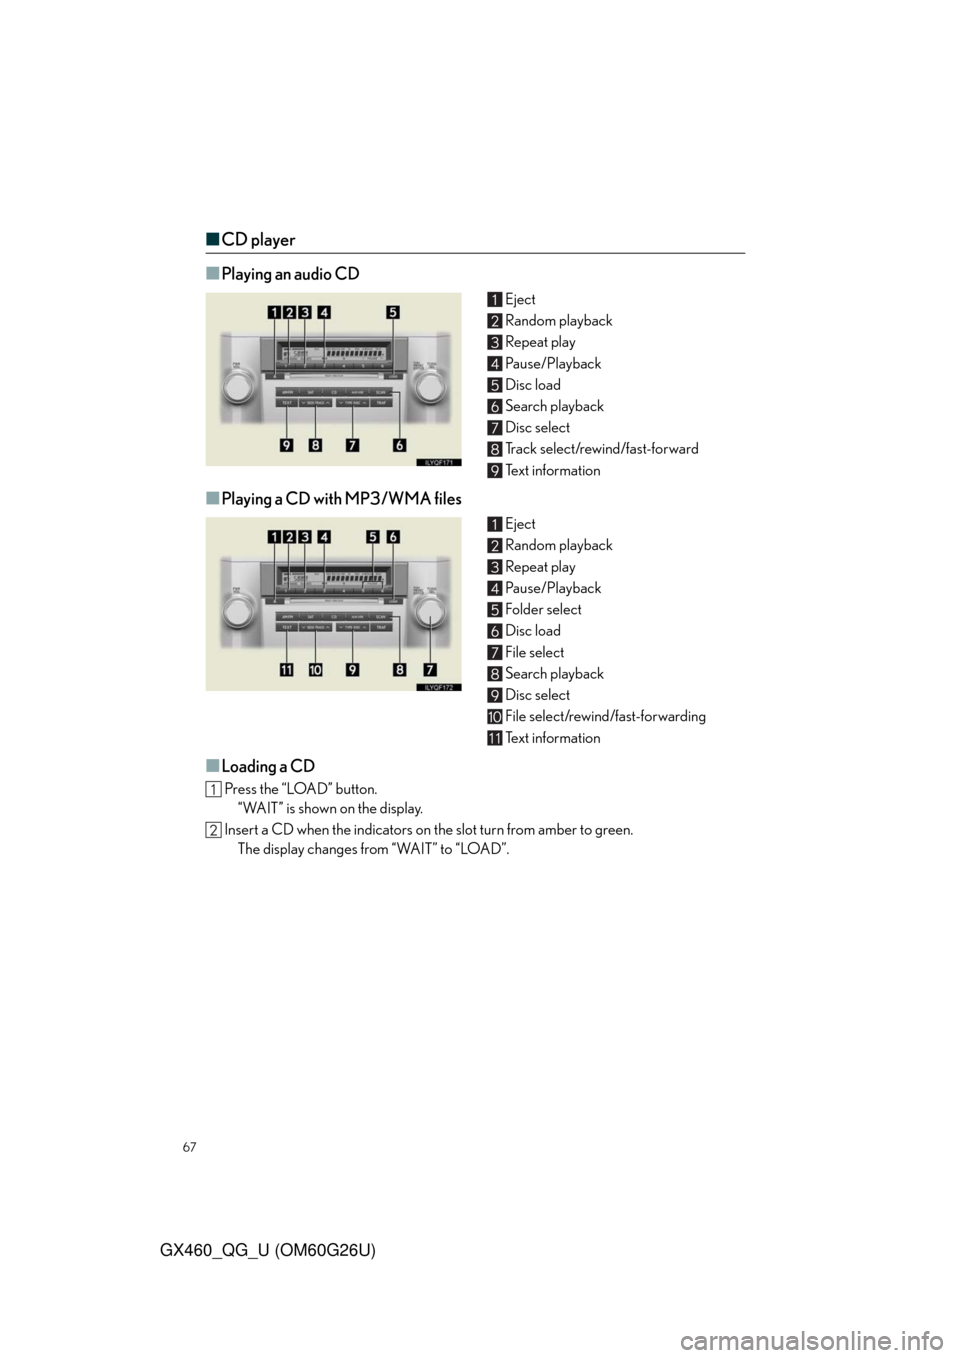 Lexus GX460 2011  Opening, Closing And Locking The Doors / LEXUS 2011 GX460 OWNERS MANUAL QUICK GUIDE (OM60G26U) 67
GX460_QG_U (OM60G26U)
■CD player
■
Playing an audio CD
Eject
Random playback 
Repeat play
Pause/Playback
Disc load
Search playback
Disc select
Track select/rewind/fast-forward
Te x t  i n f o r